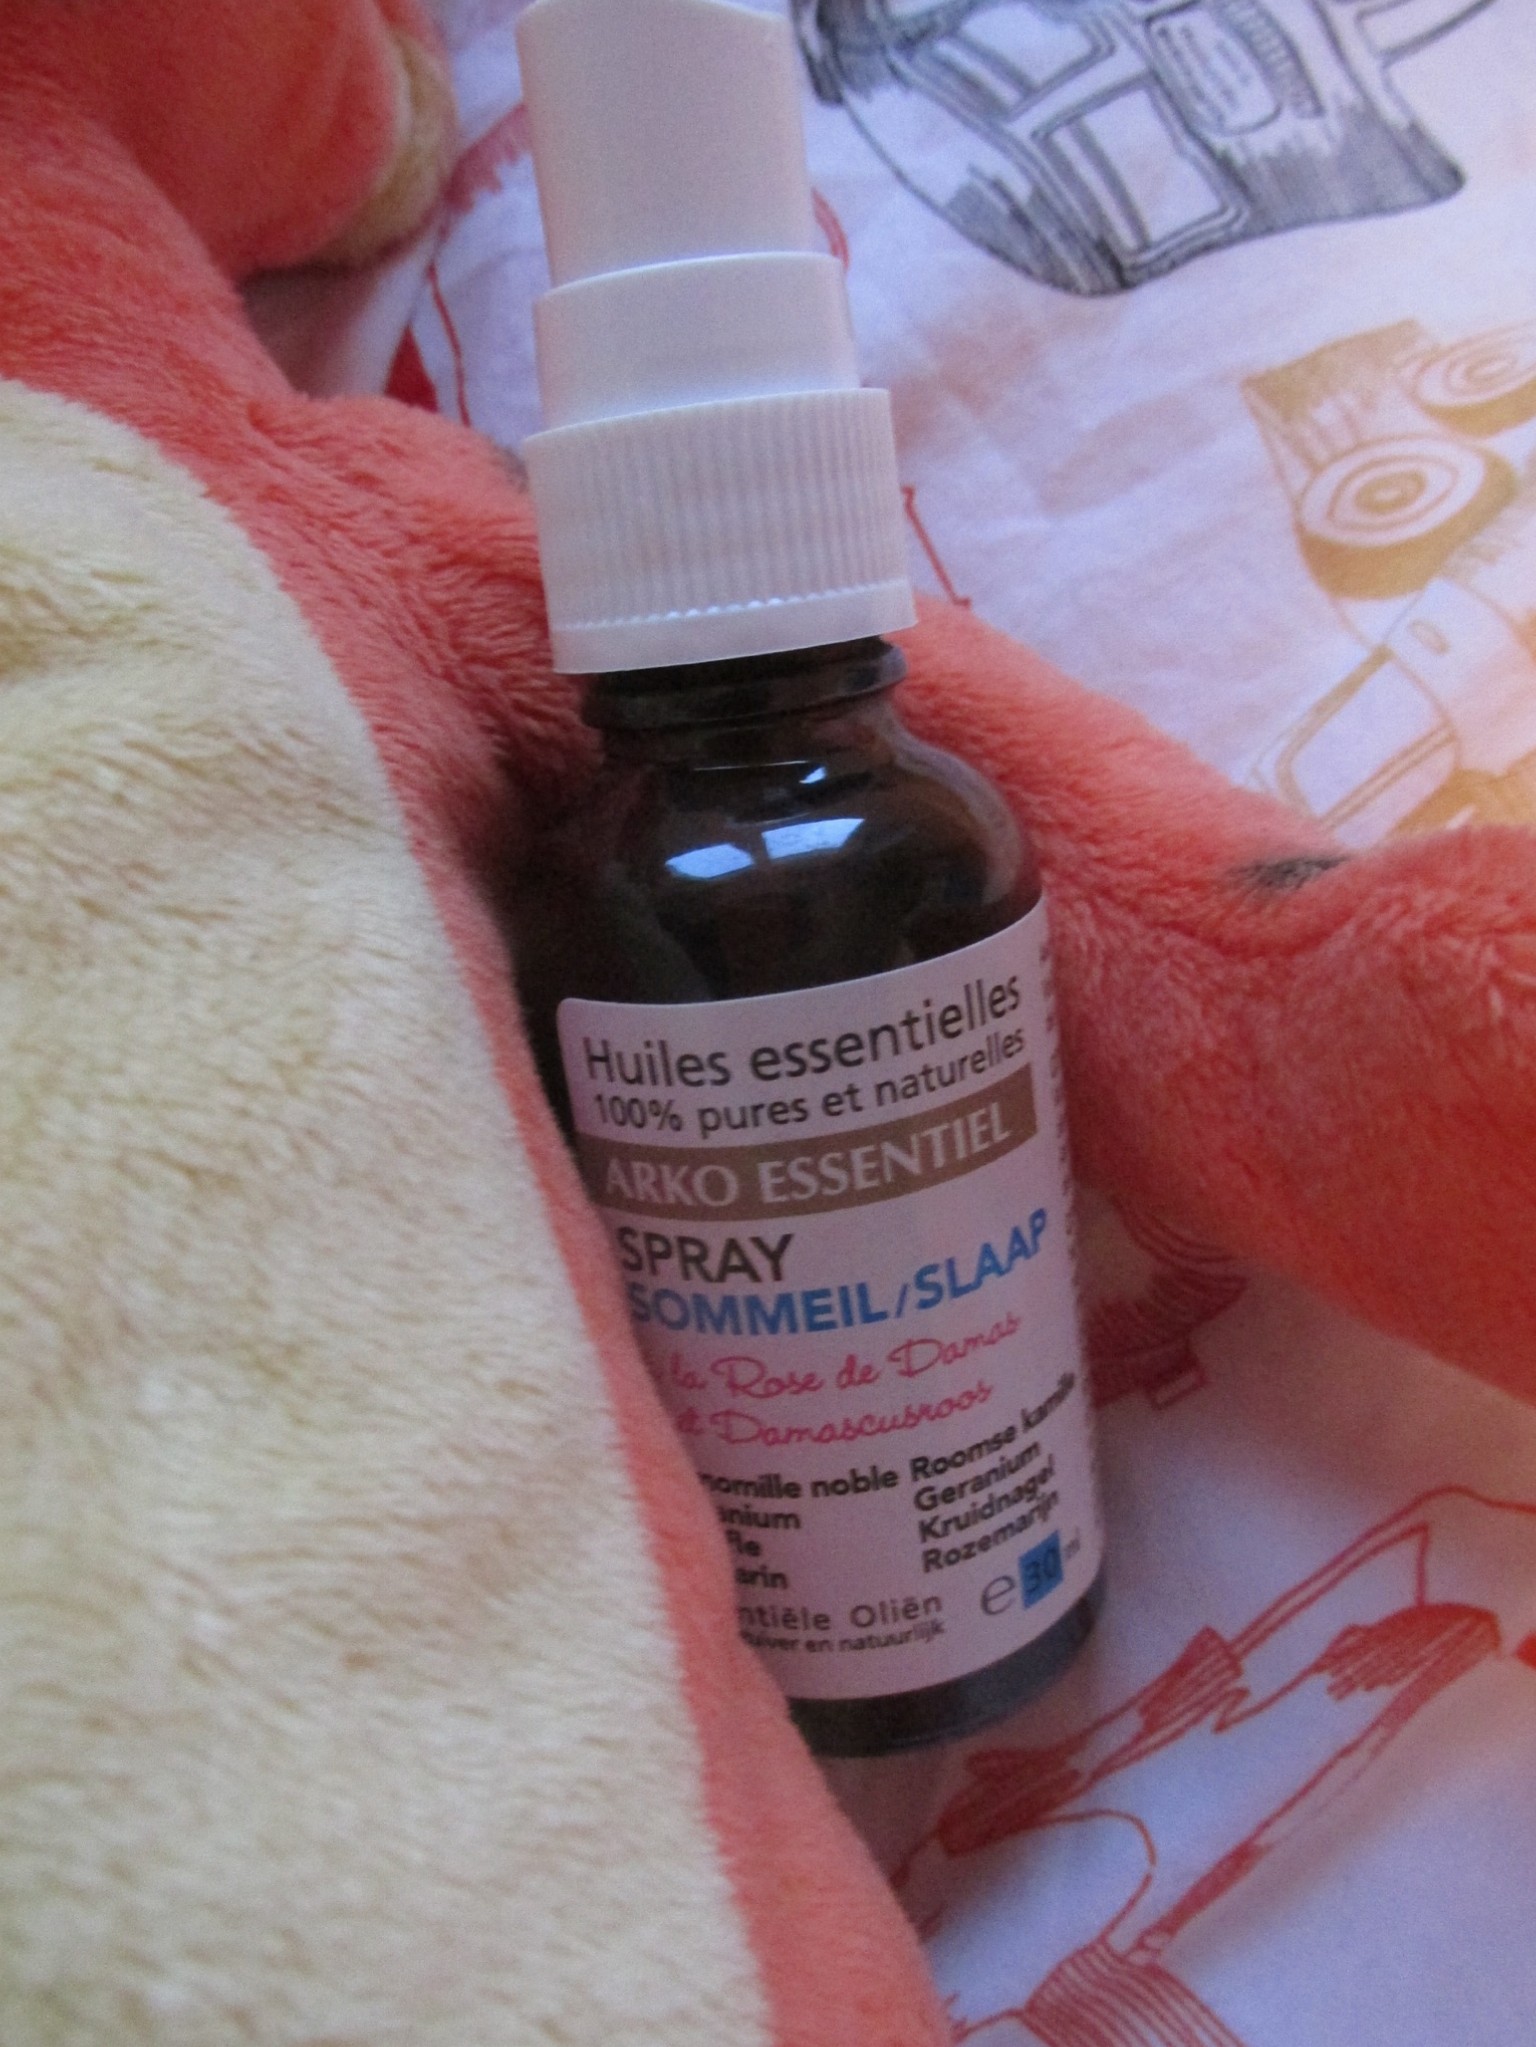 Arkopharma spray sommeil